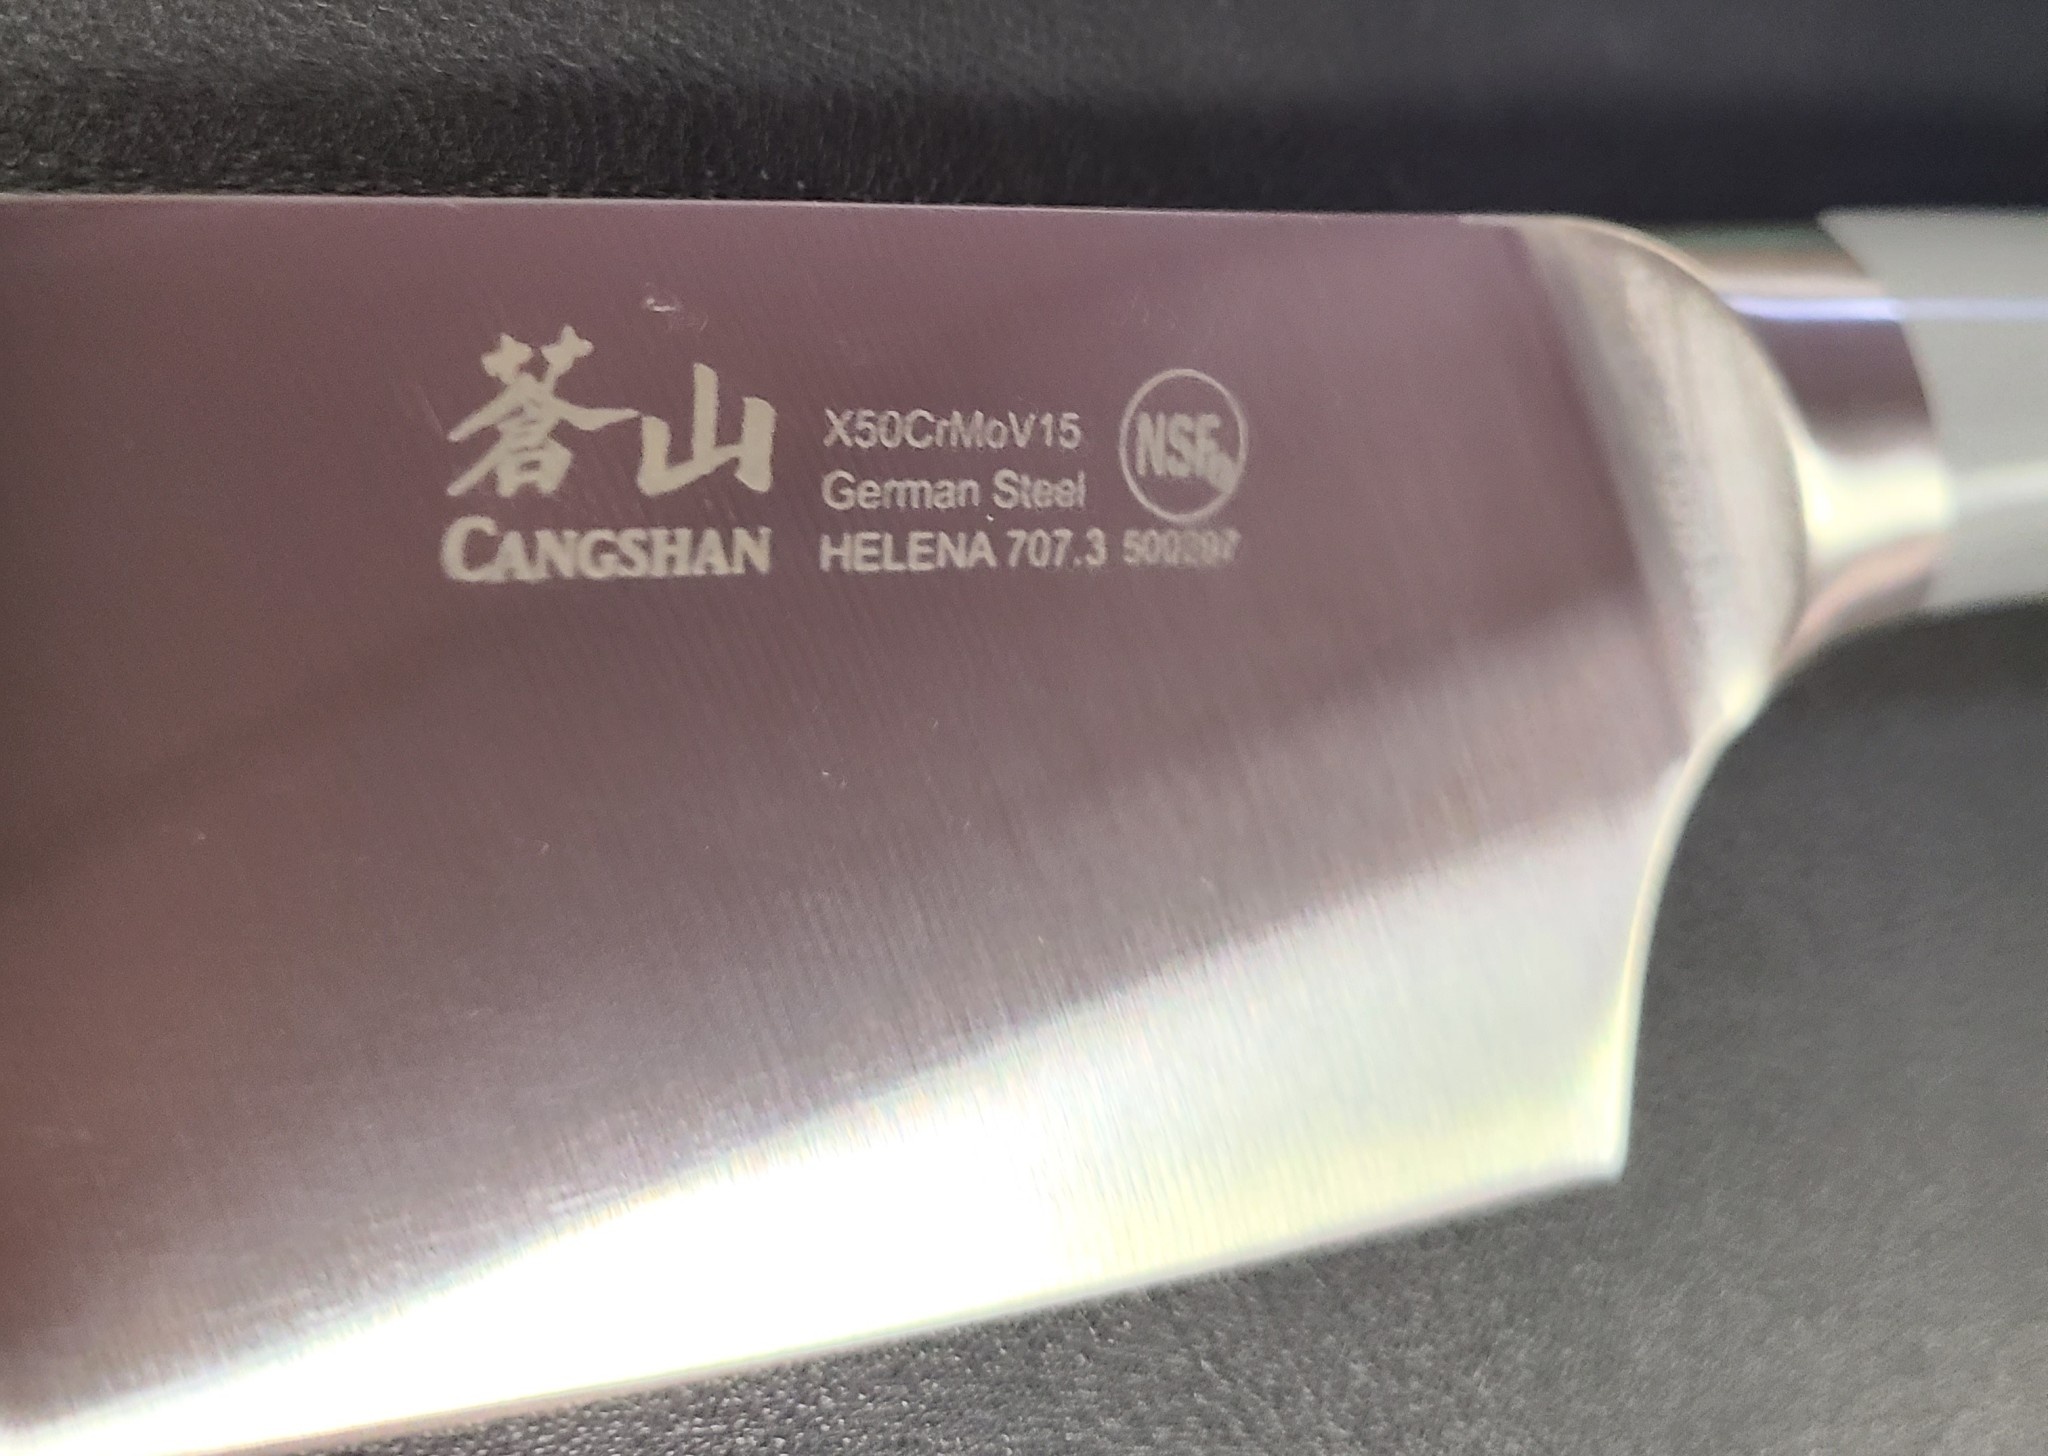 Cangshan Helena Series Chef's Knife, Forged German Steel | Black